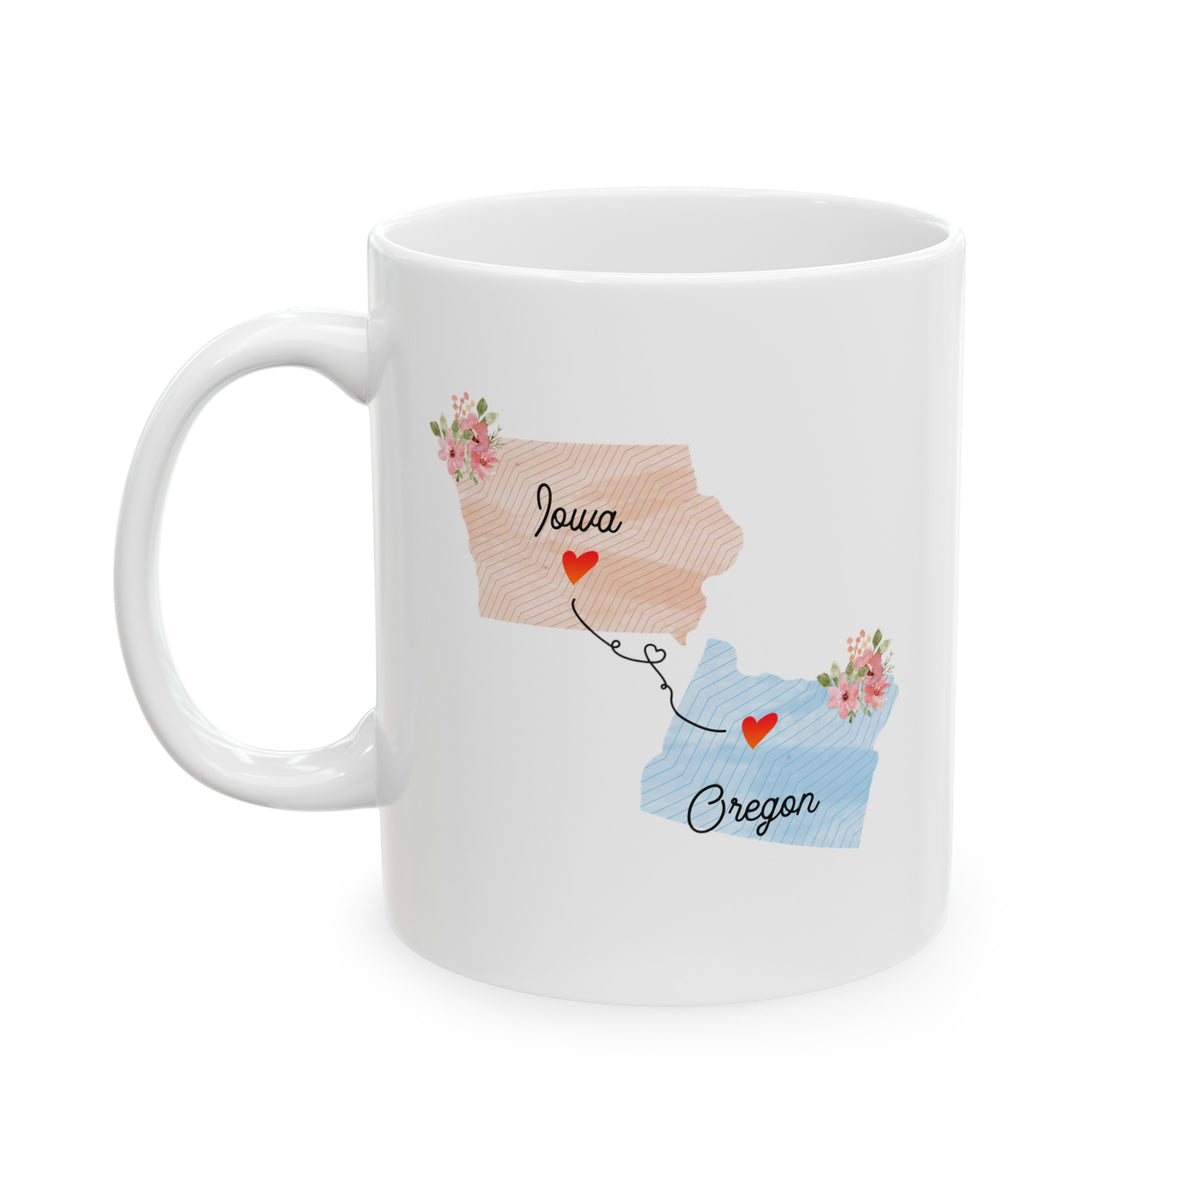 Iowa Oregon Gifts - Long Distance State 11 OZ Coffee Mug for Mom and Dad